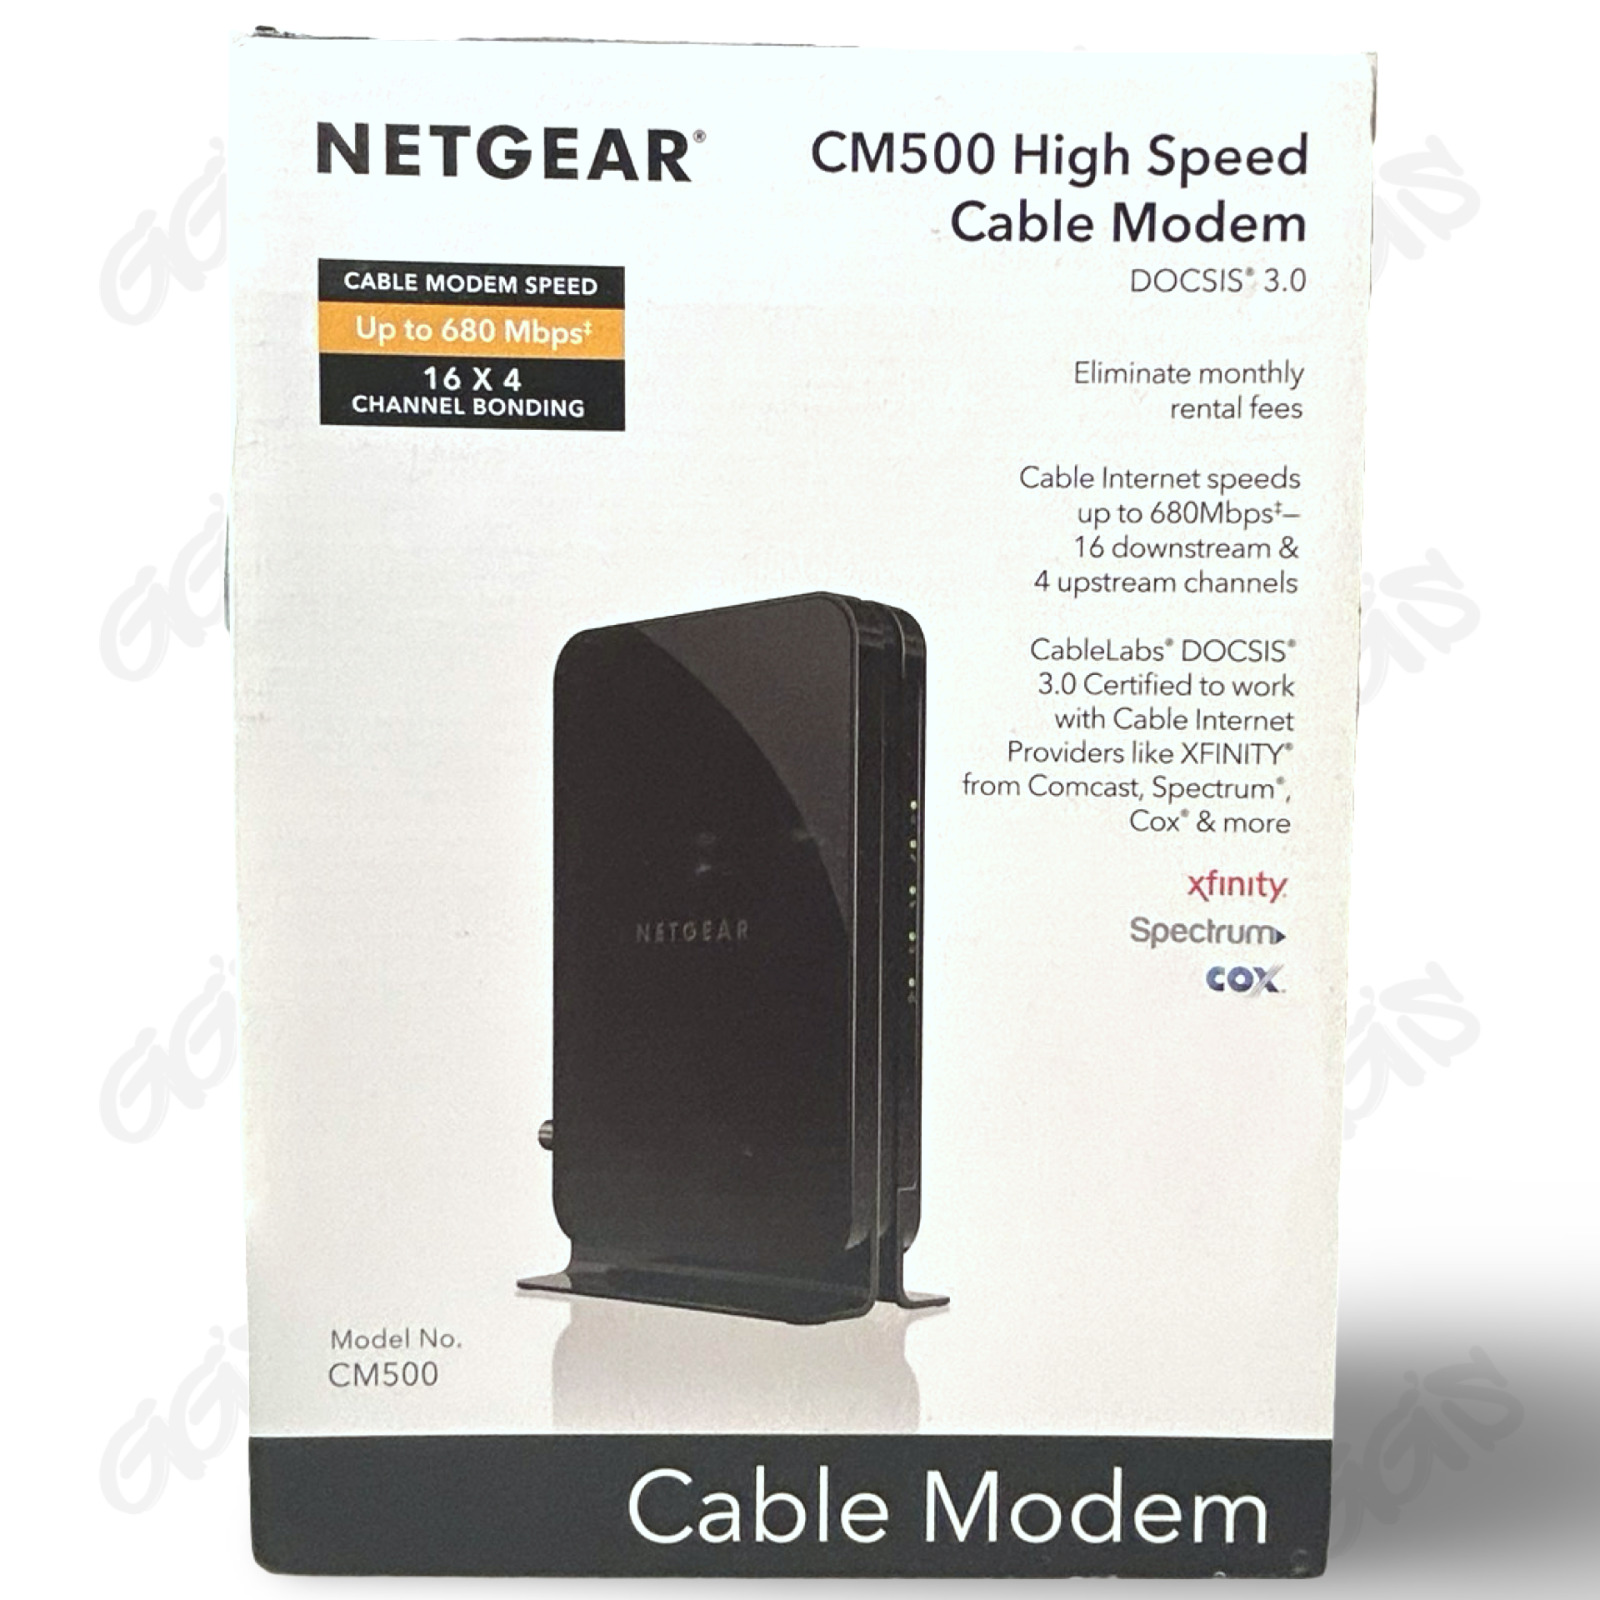 Netgear CM500 High Speed Cable Modem DOCSIS 3.0 Model No CM500